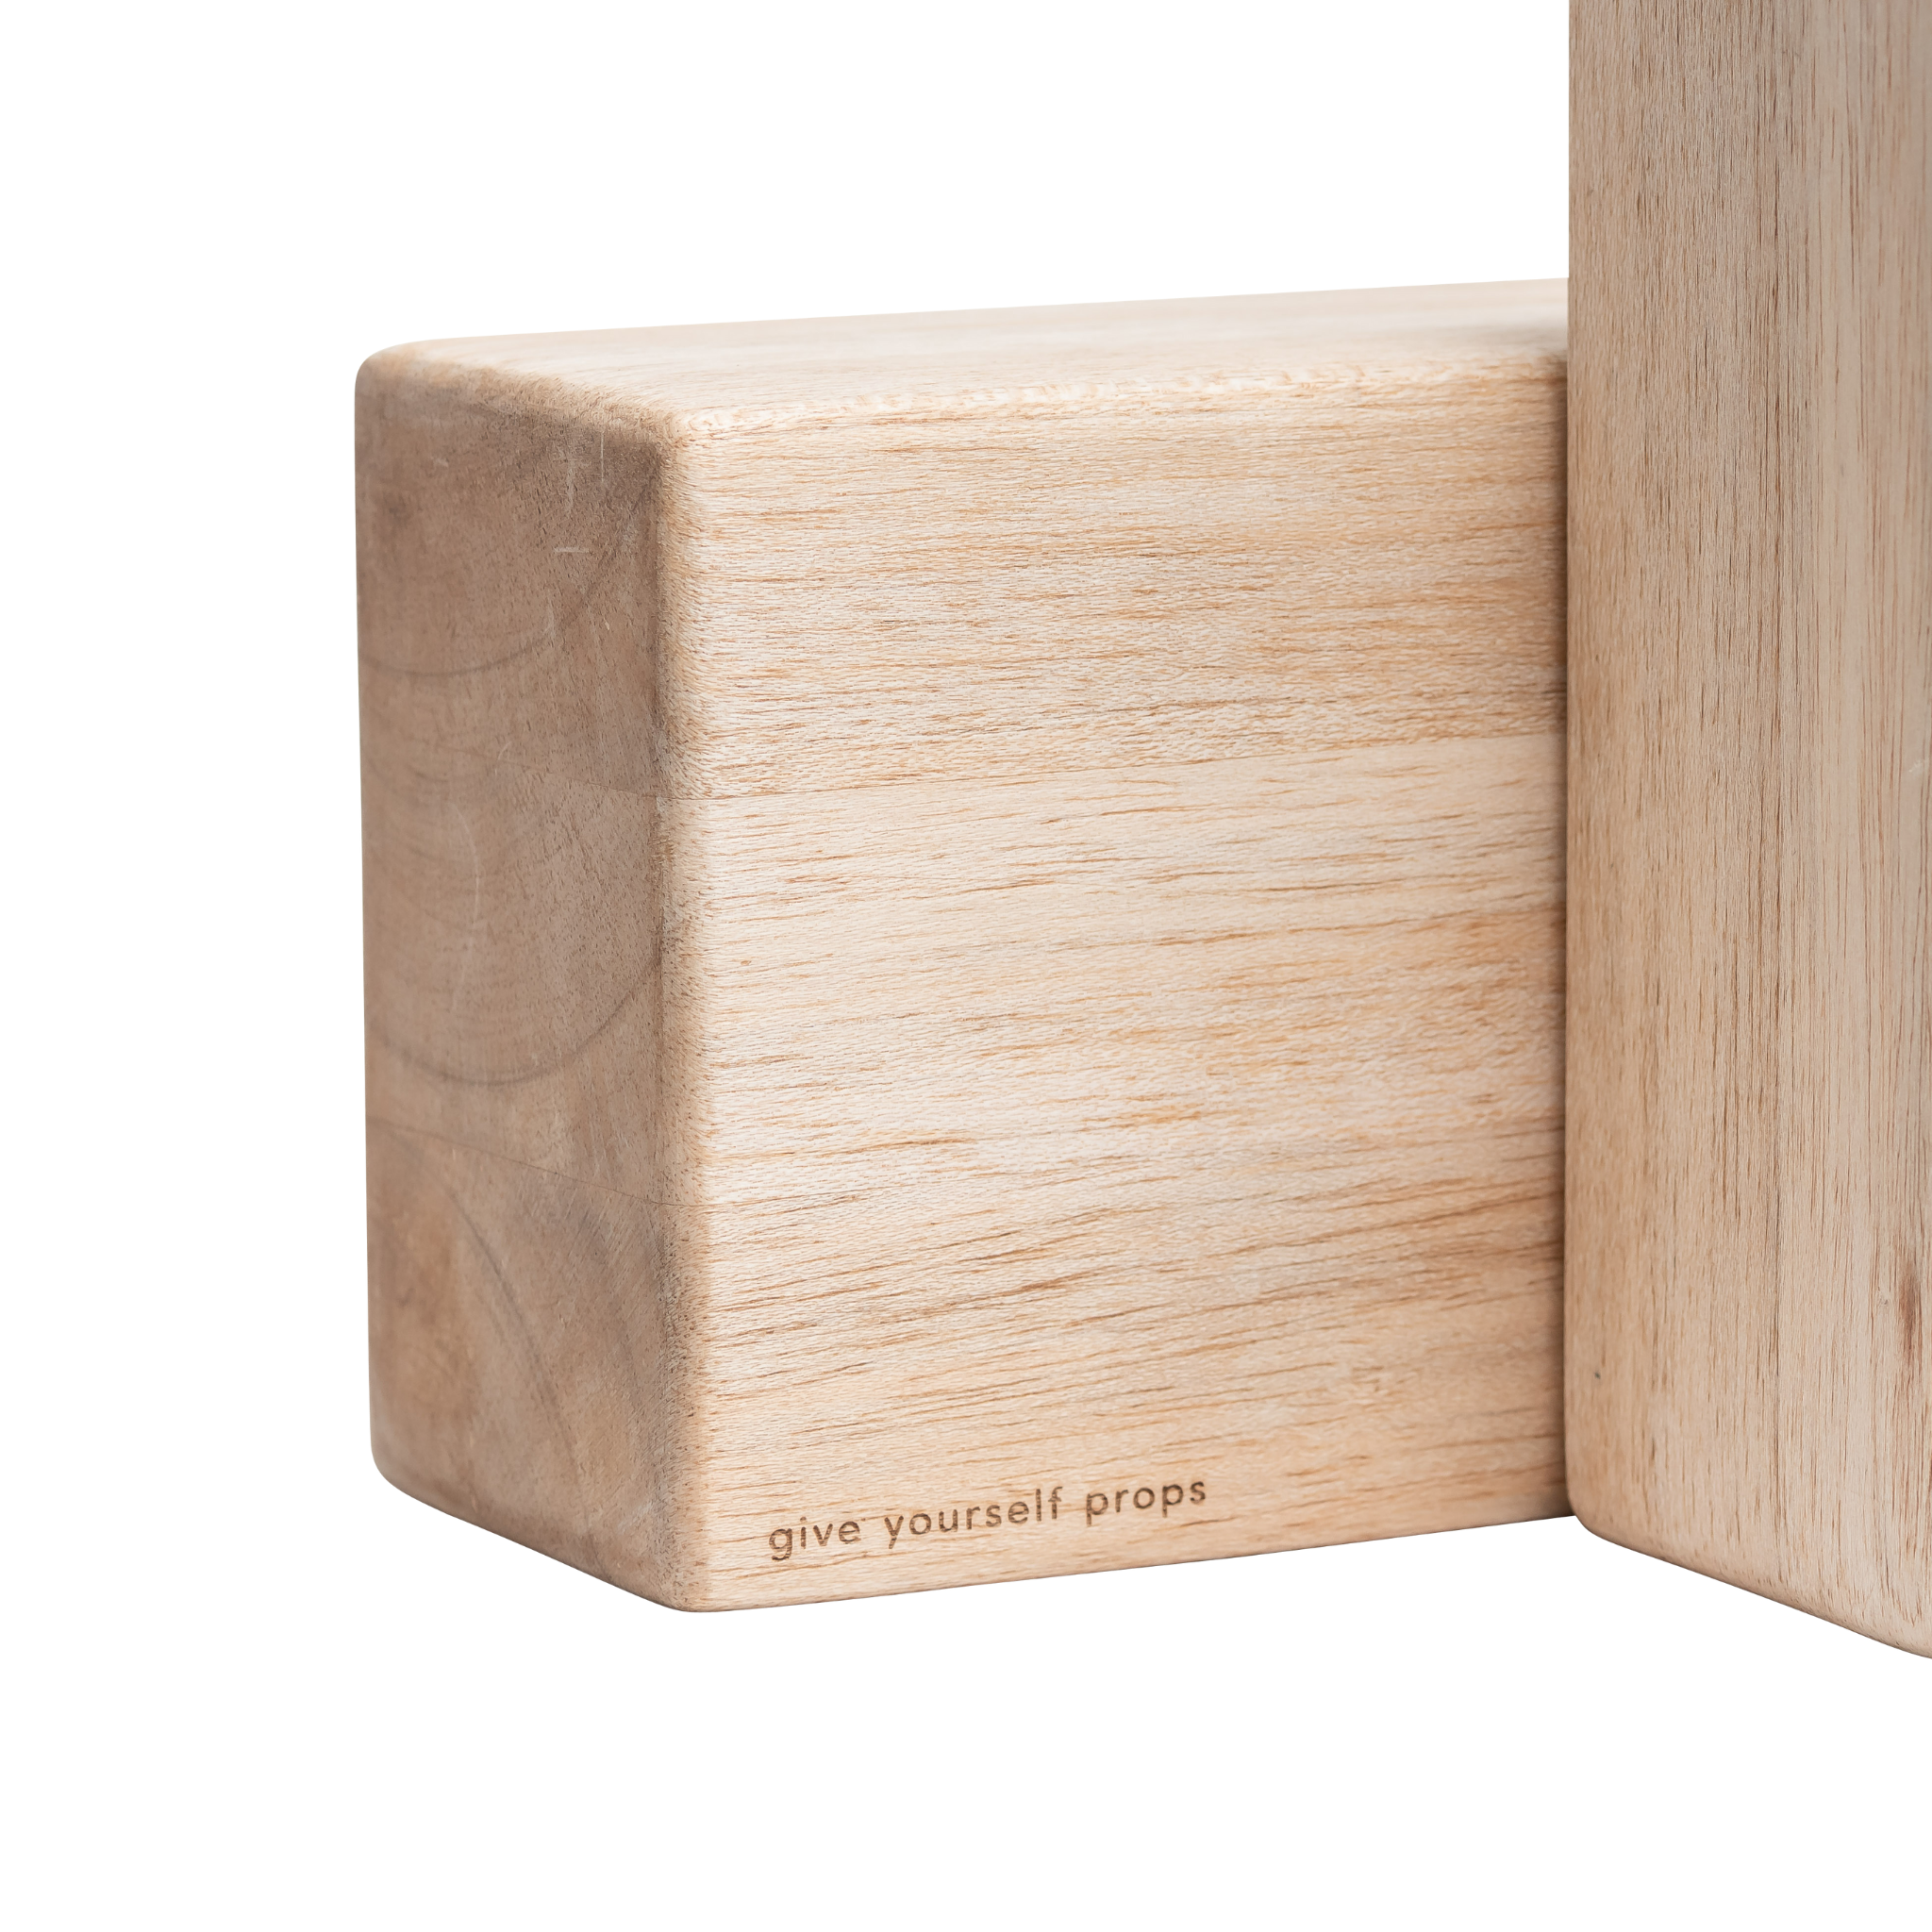 Blog - Choosing between yoga blocks: Foam, cork or wood? - Yogisha